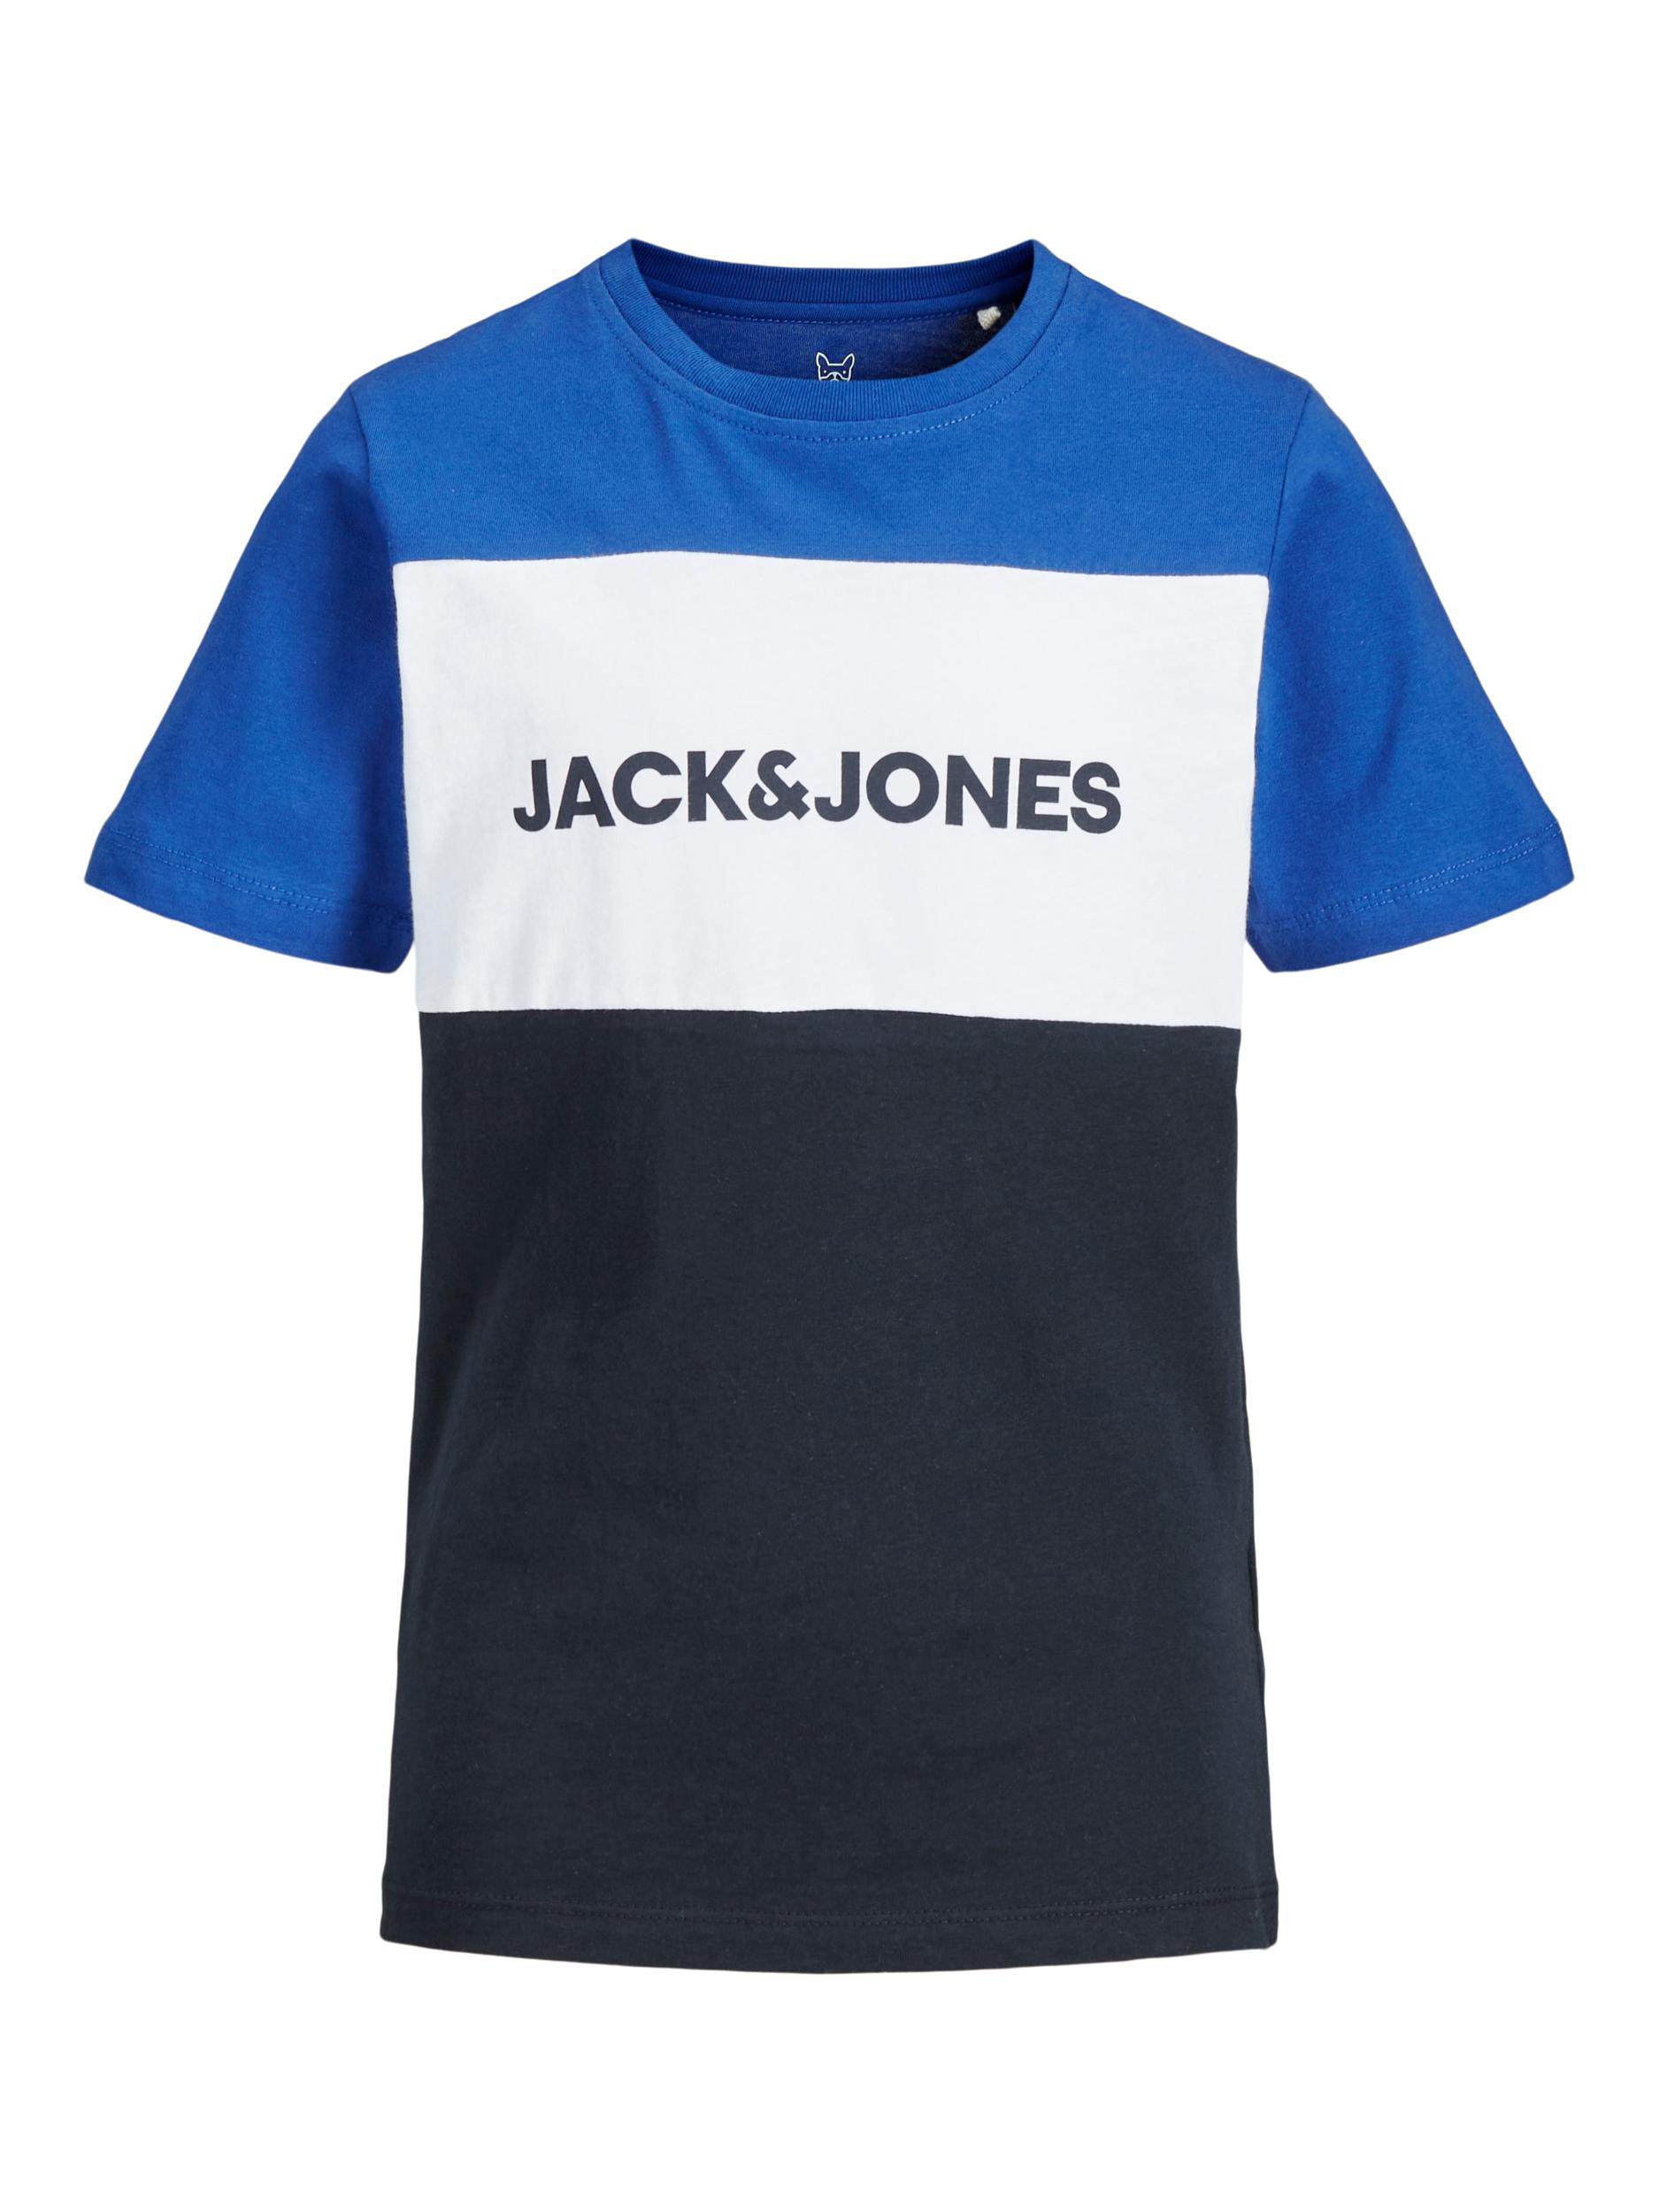 Jack & Jones Junior Koszulka w kolorze Królewski Błękit, Niebieska Nocm 